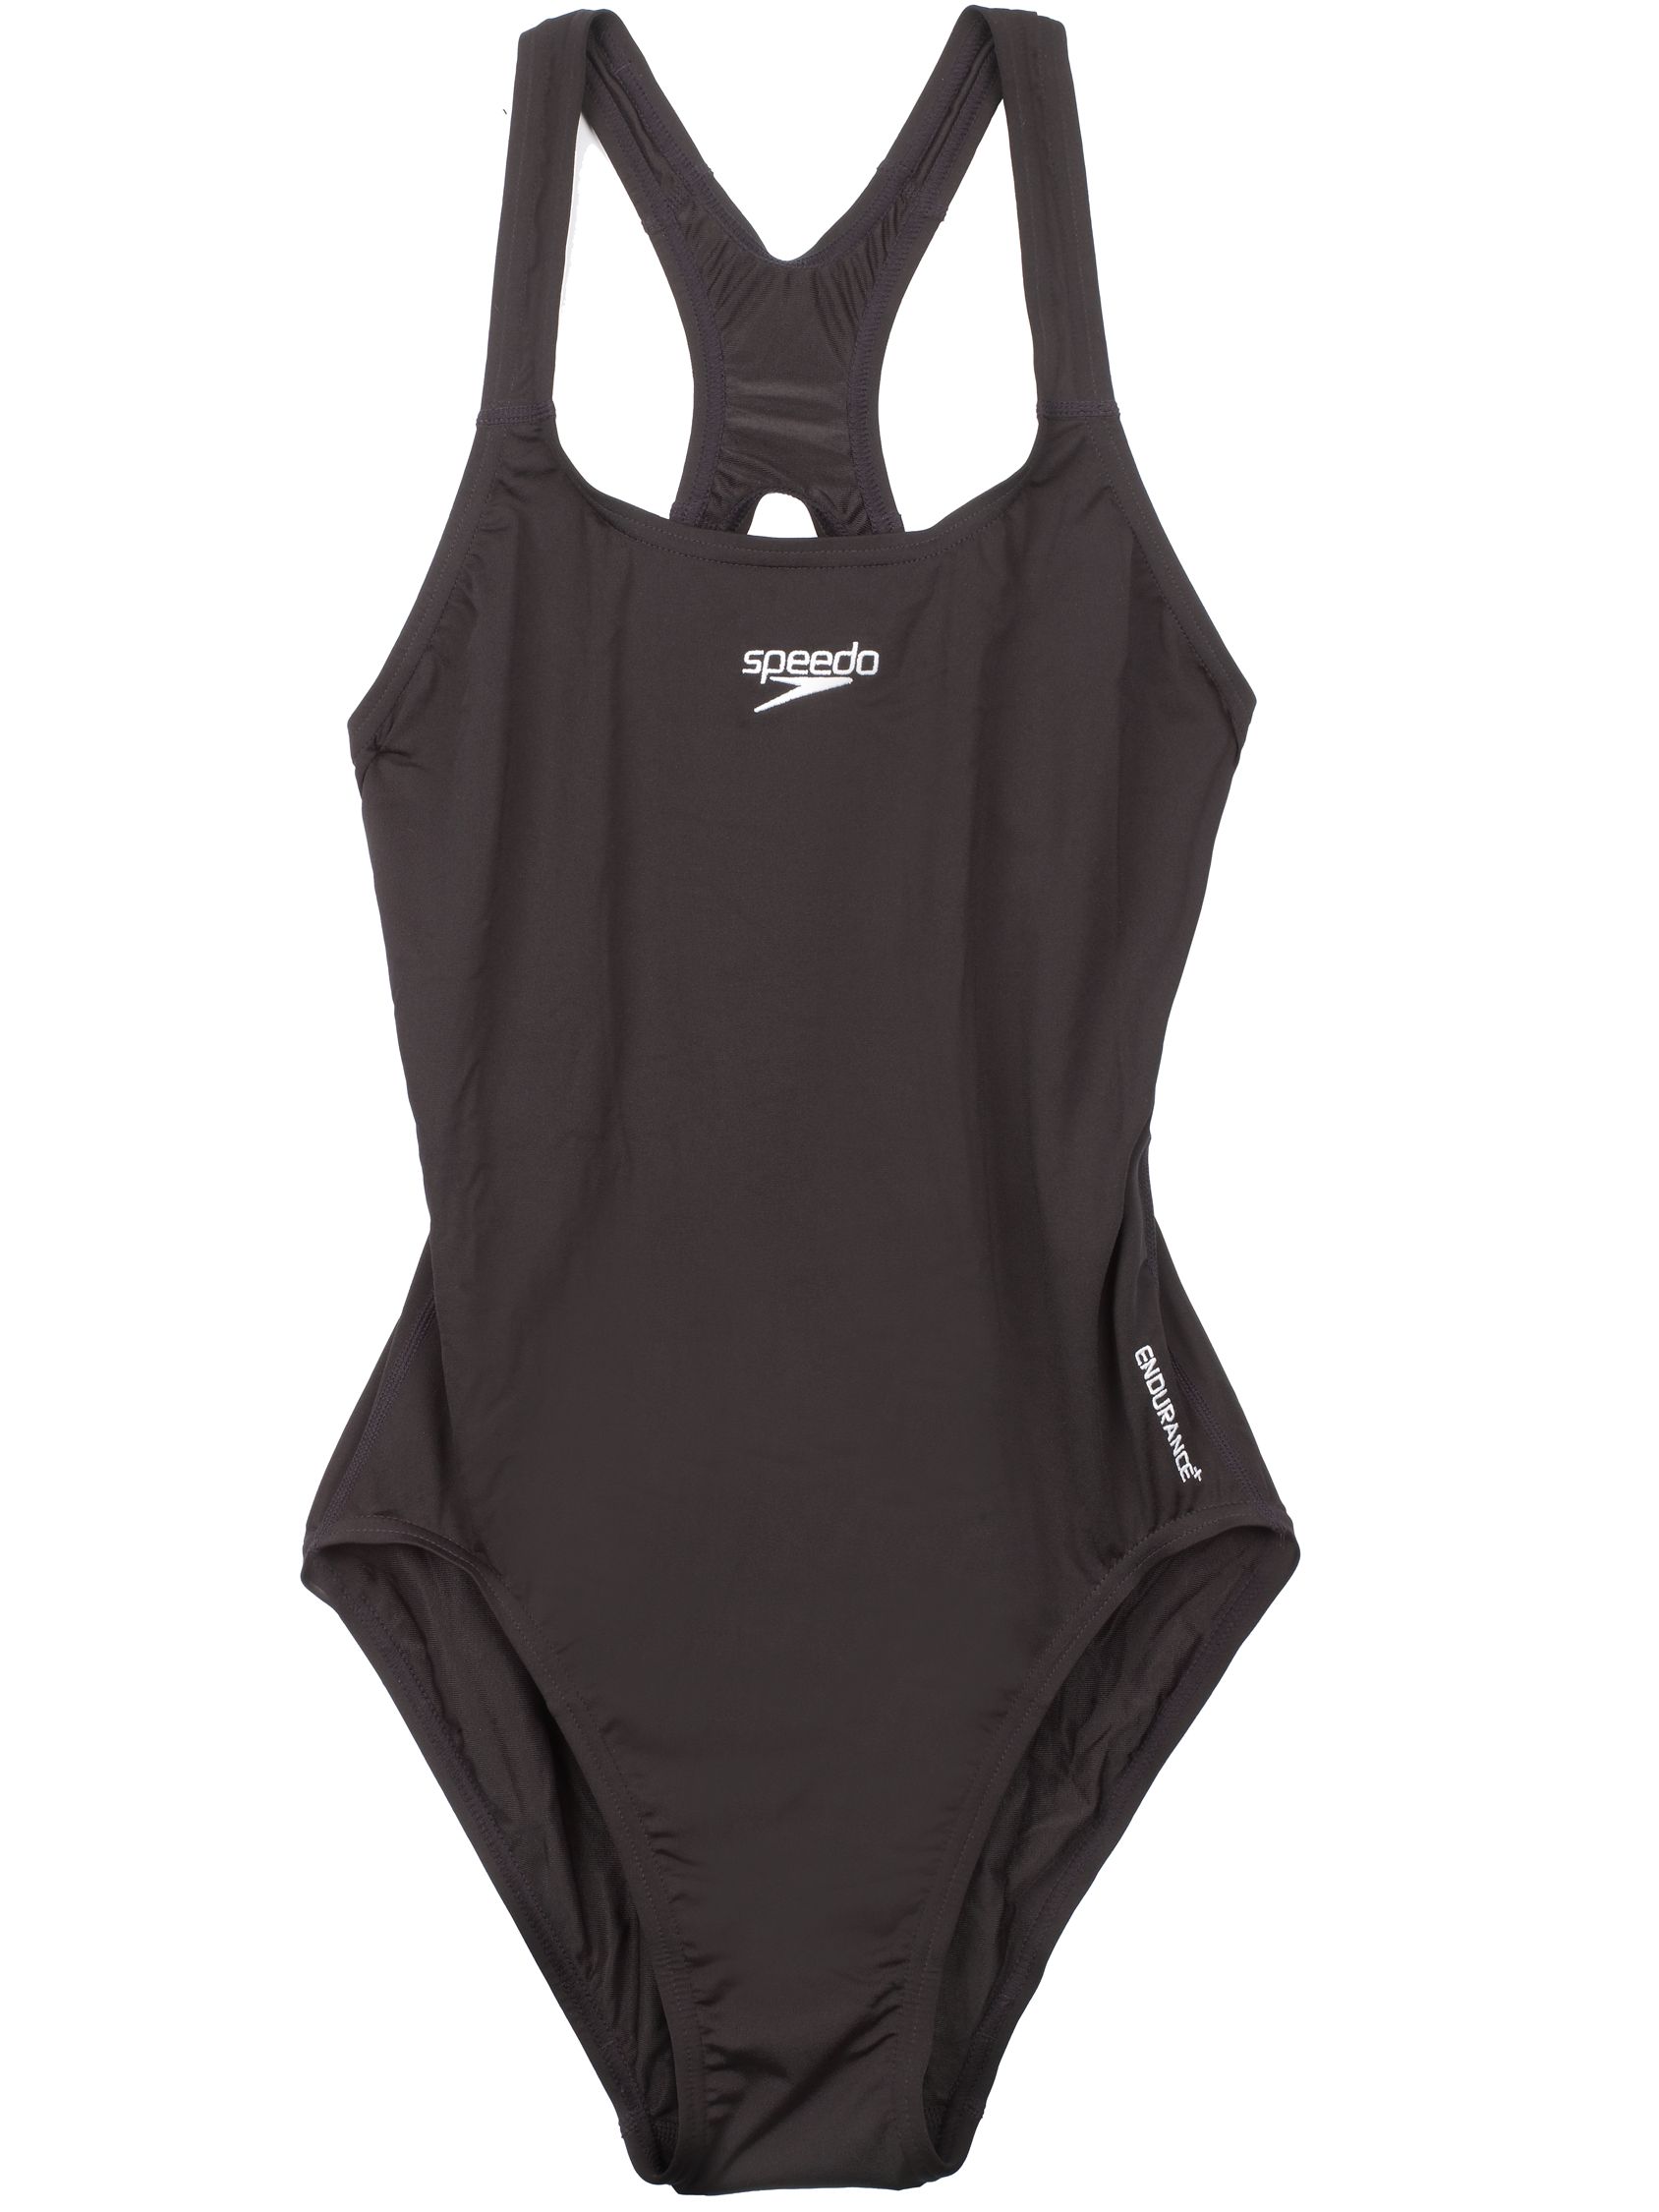 Speedo Medalist Swimsuit, Black